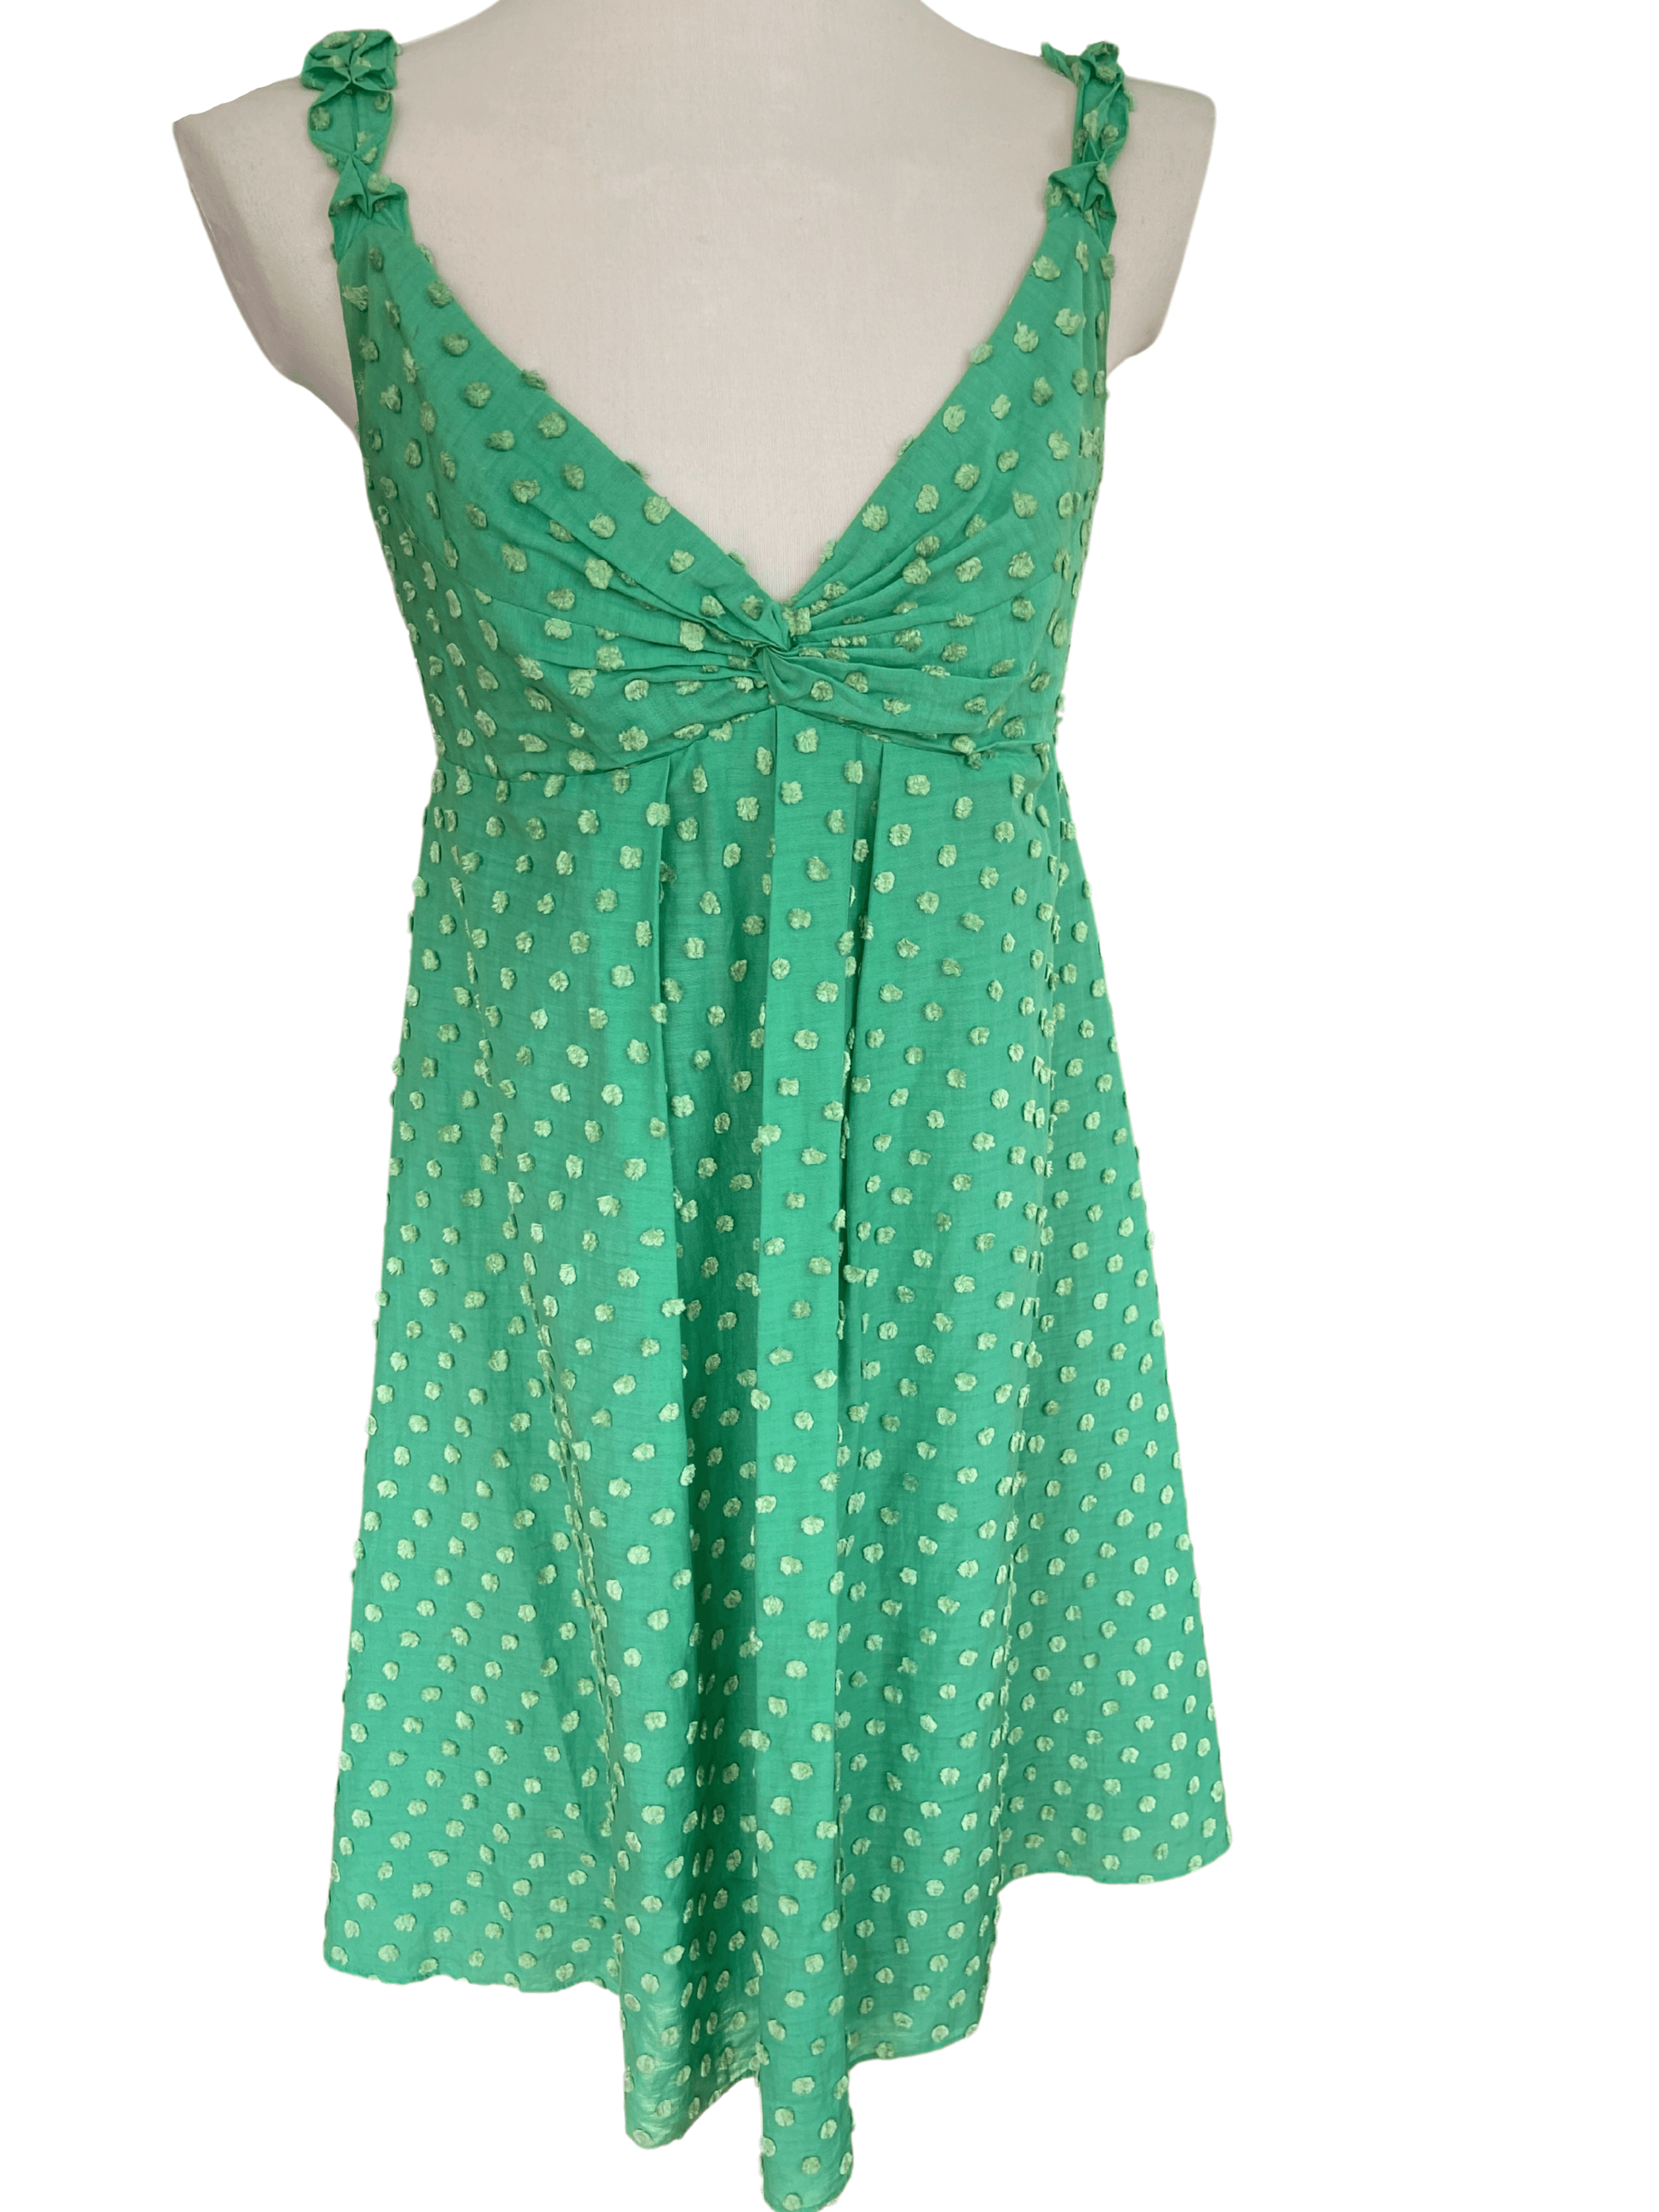 Warm Spring NINE WEST green dot dress